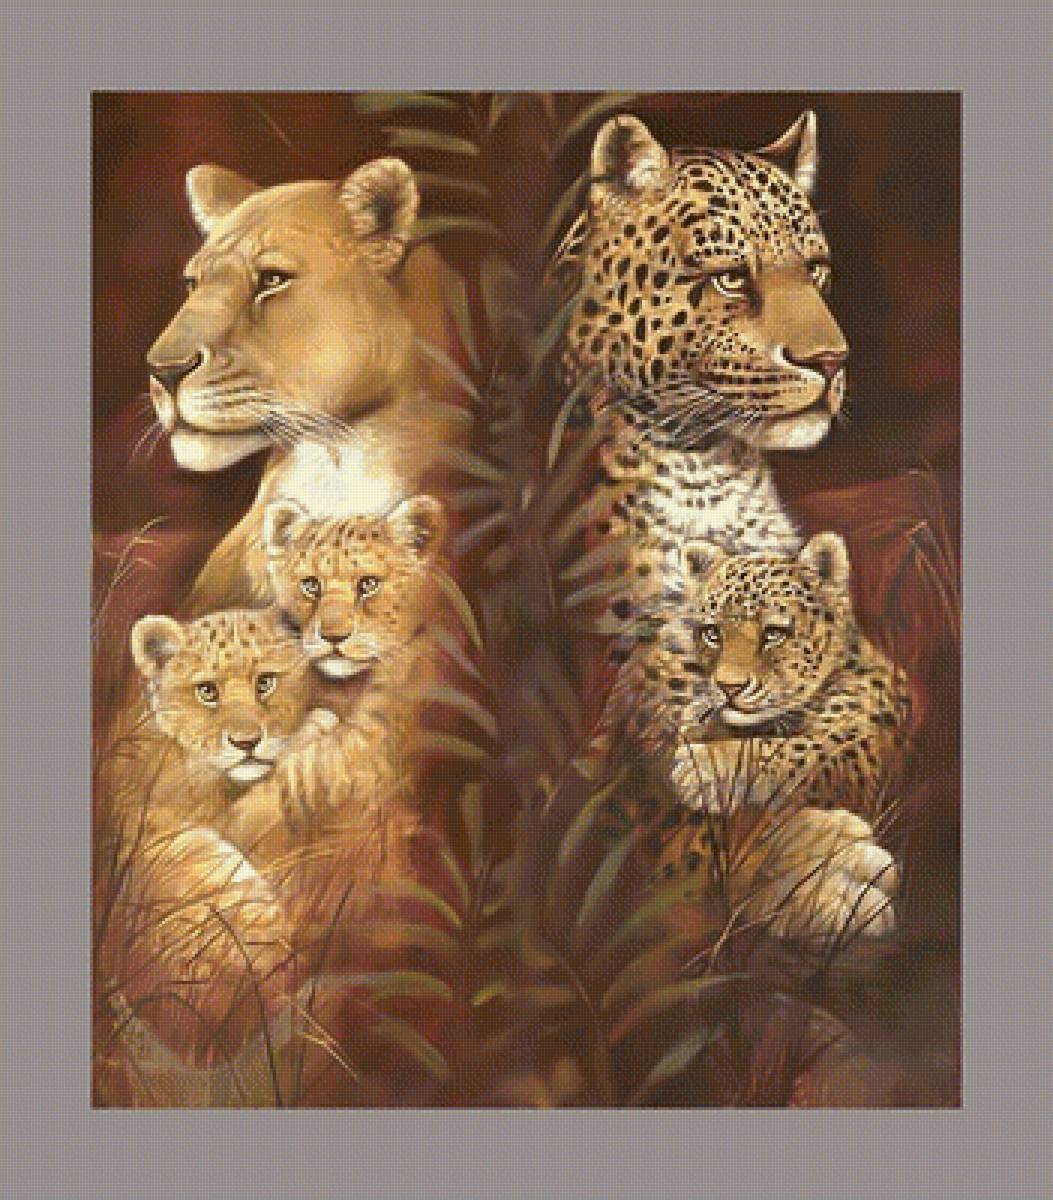 Лев и леопард с котятами. - лев, леопард, хищники, котенок, животные. - предпросмотр